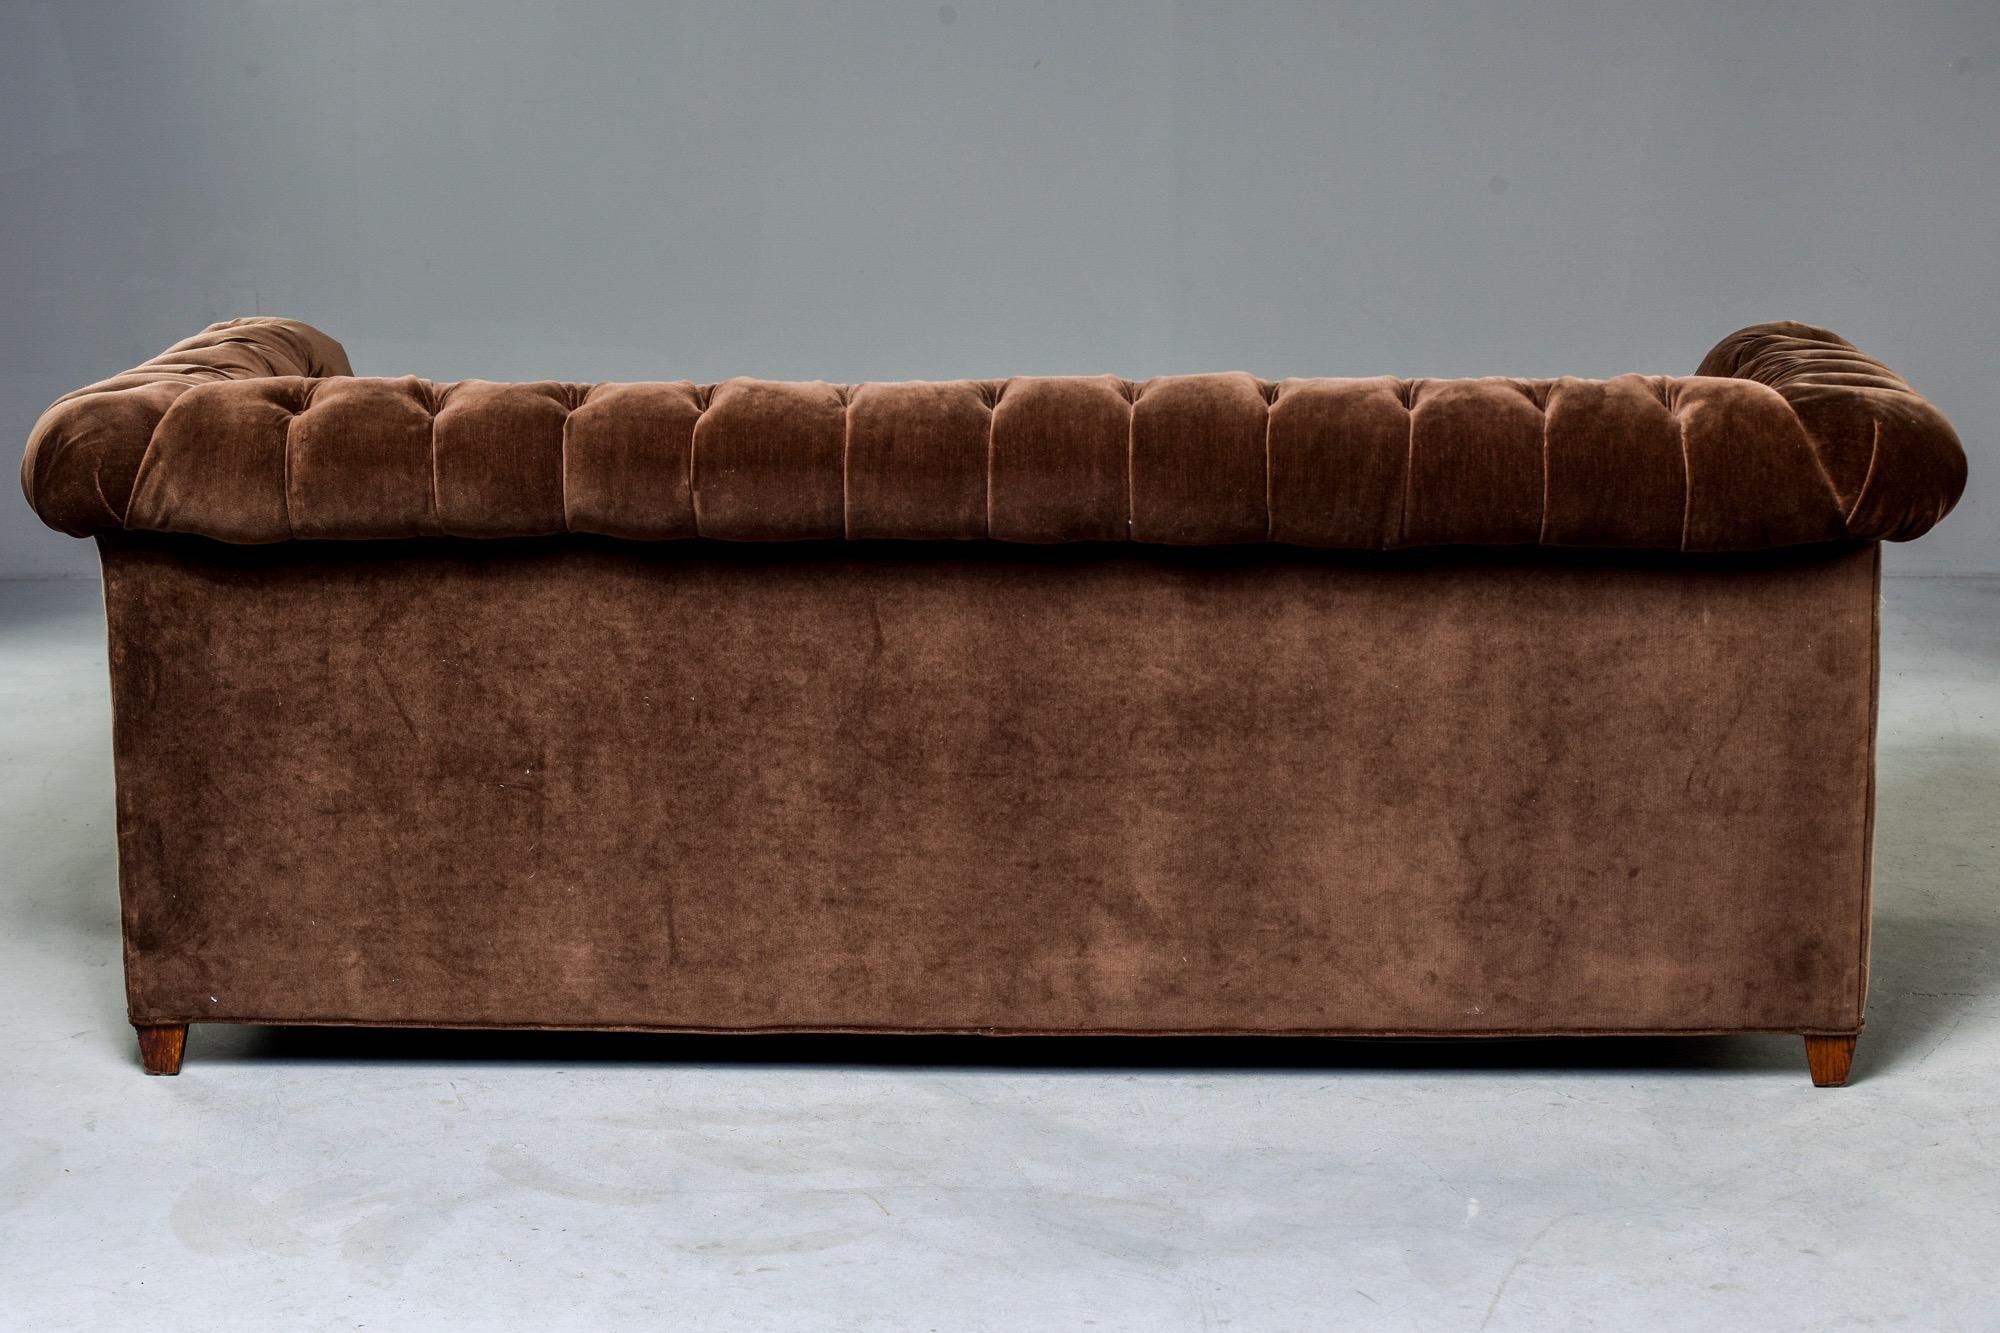 20th Century Midcentury Chesterfield Sofa with New Velvet Upholstery